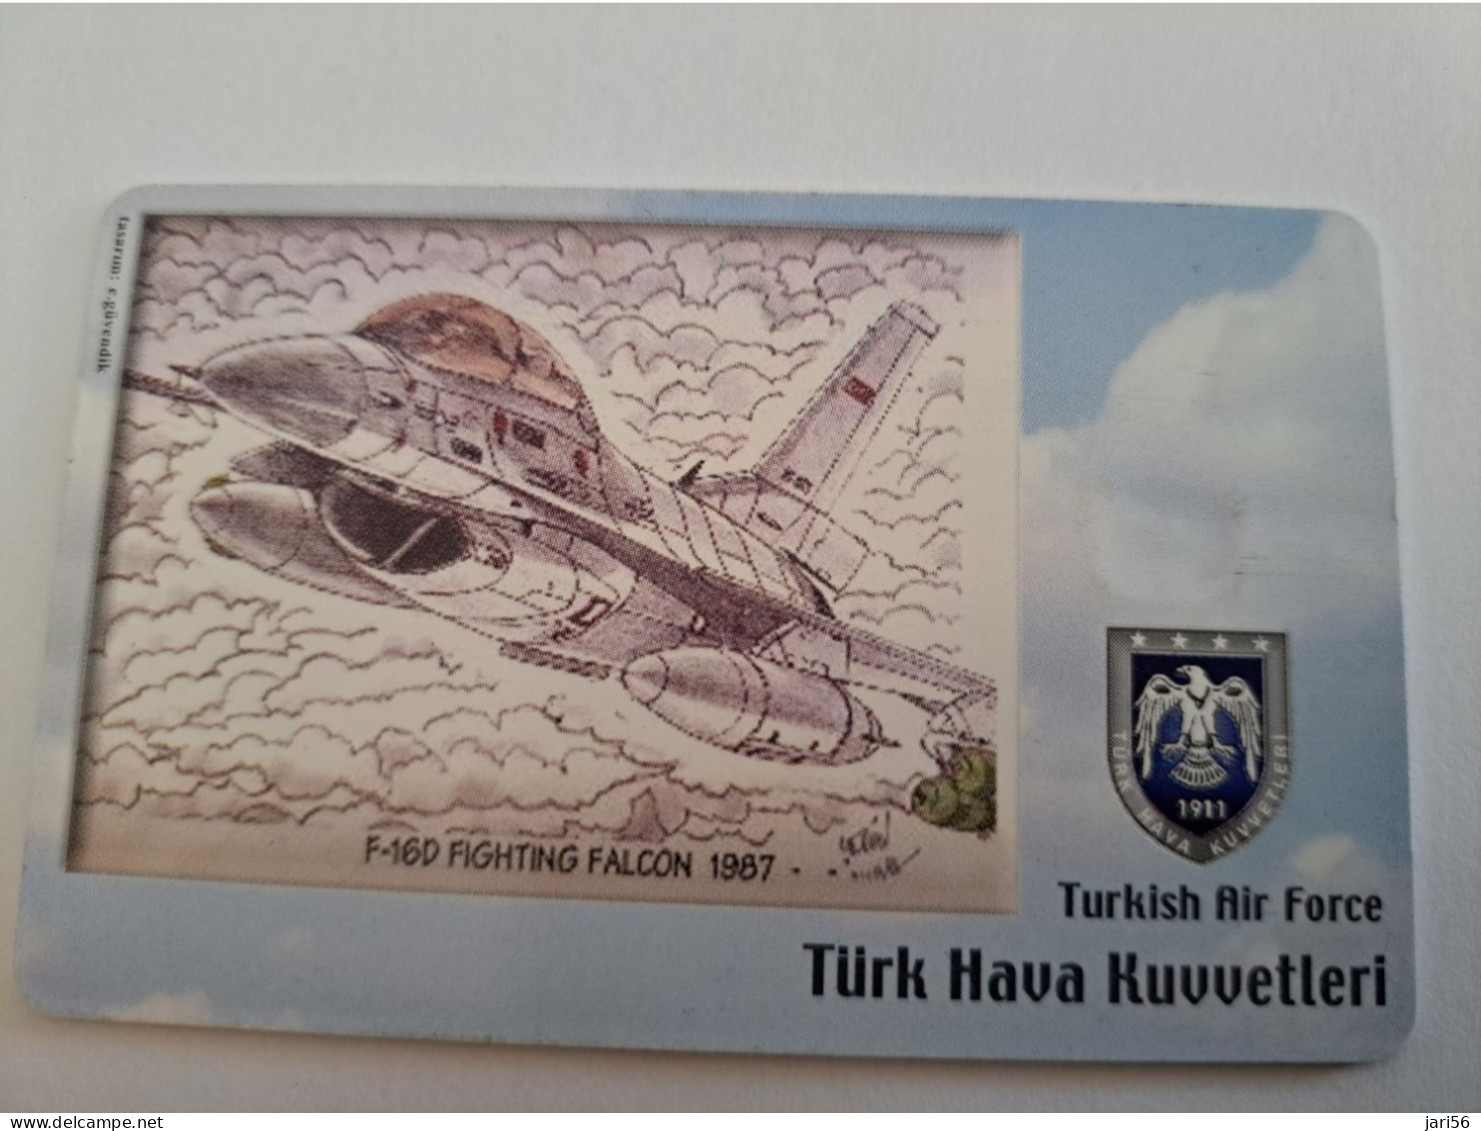 TURKIJE / 50 UNITS/ CHIPCARD/ TURKISH AIR FORCE  / DIFFERENT PLANES /        Fine Used Card  **15423** - Türkei